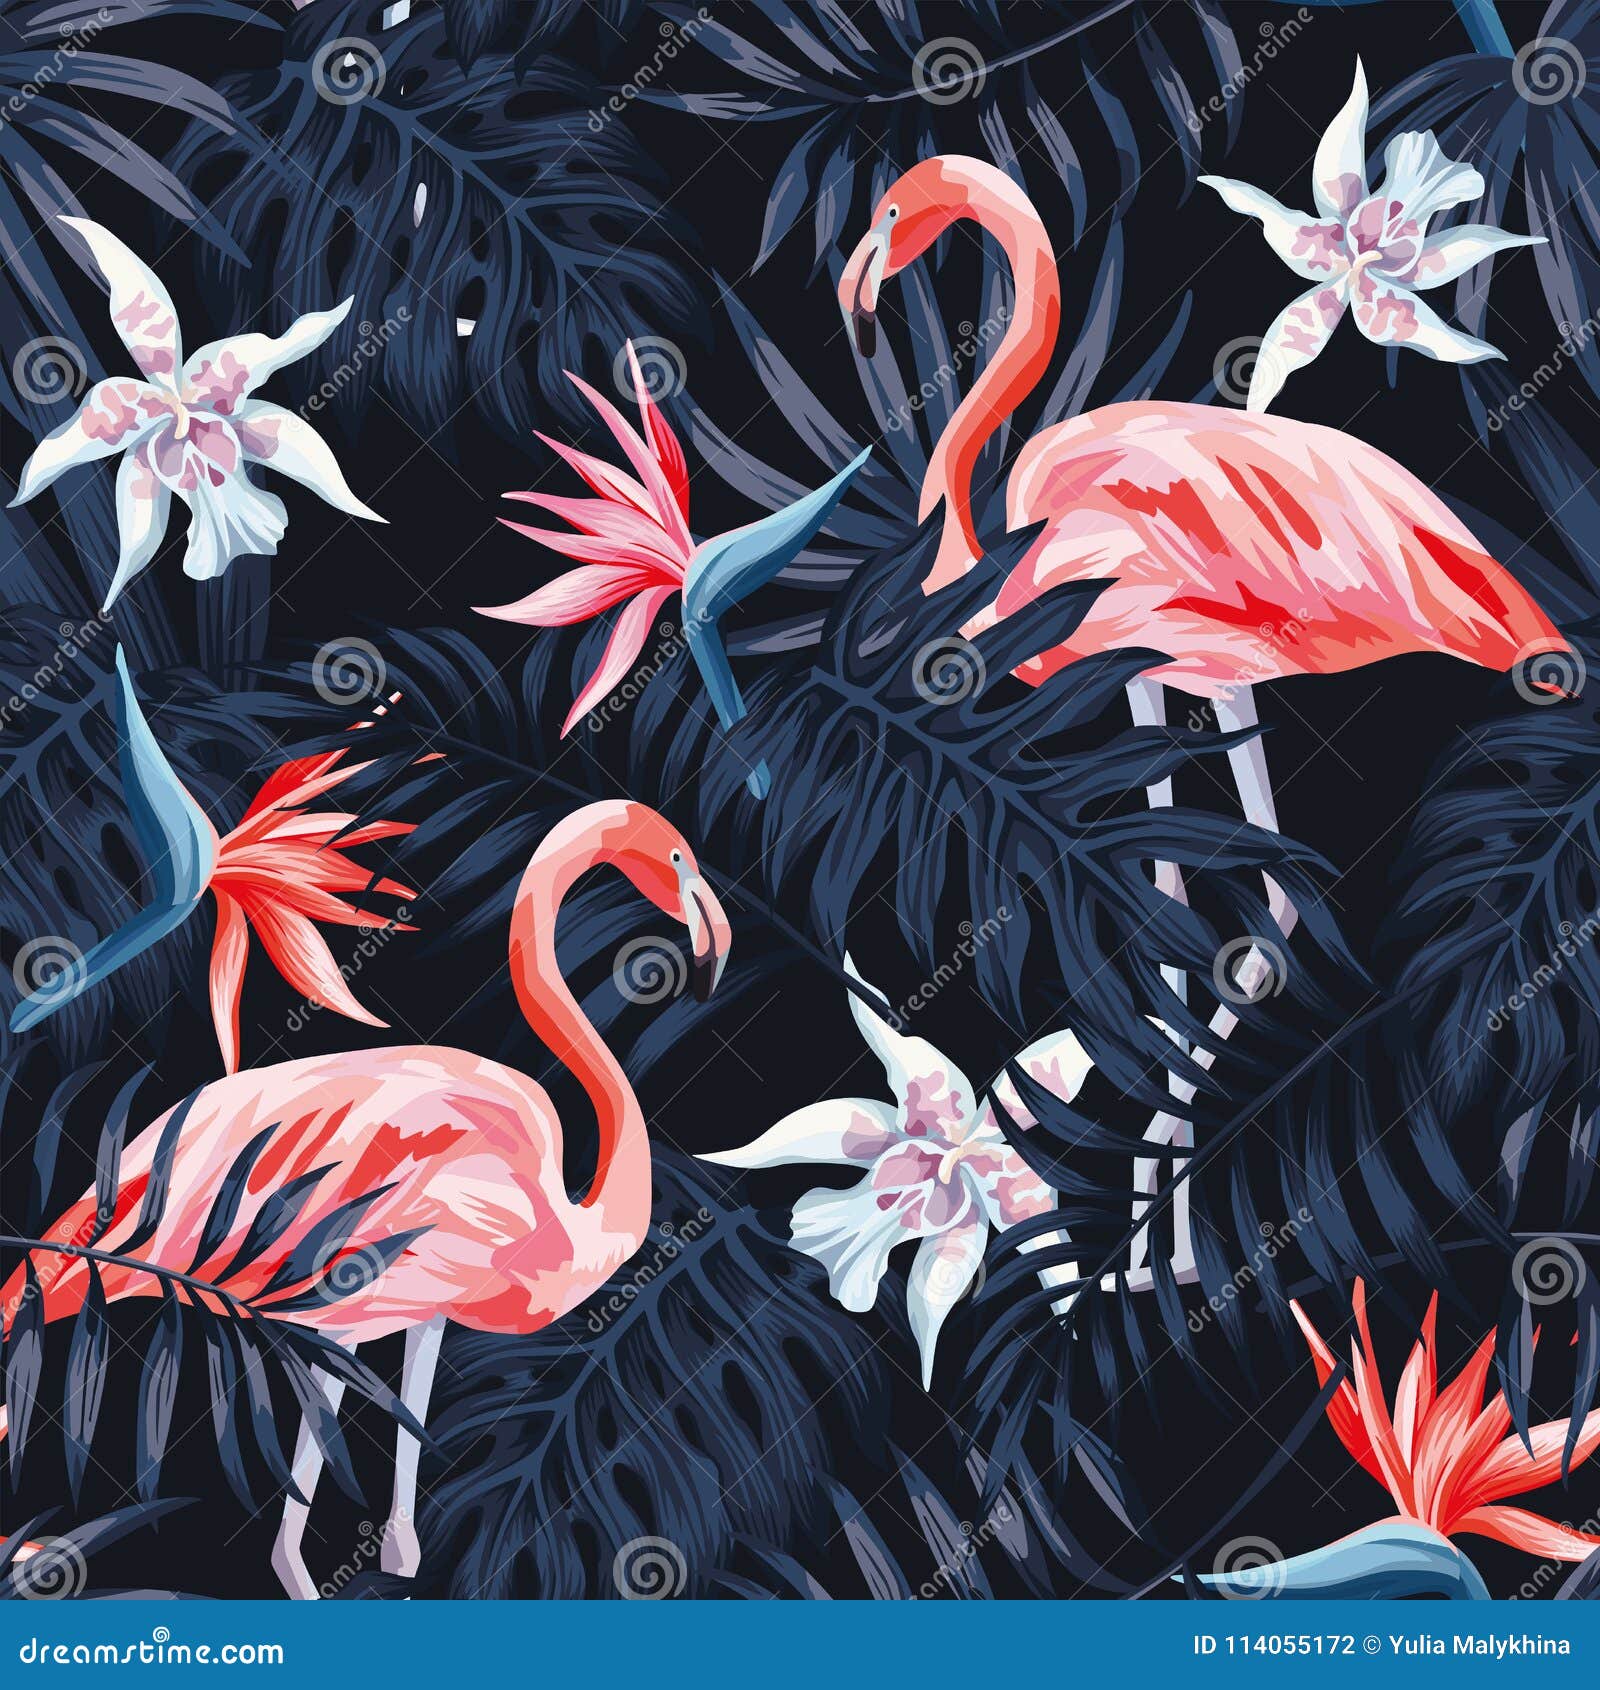 flamingo strelitzia palm leaves dark background pattern